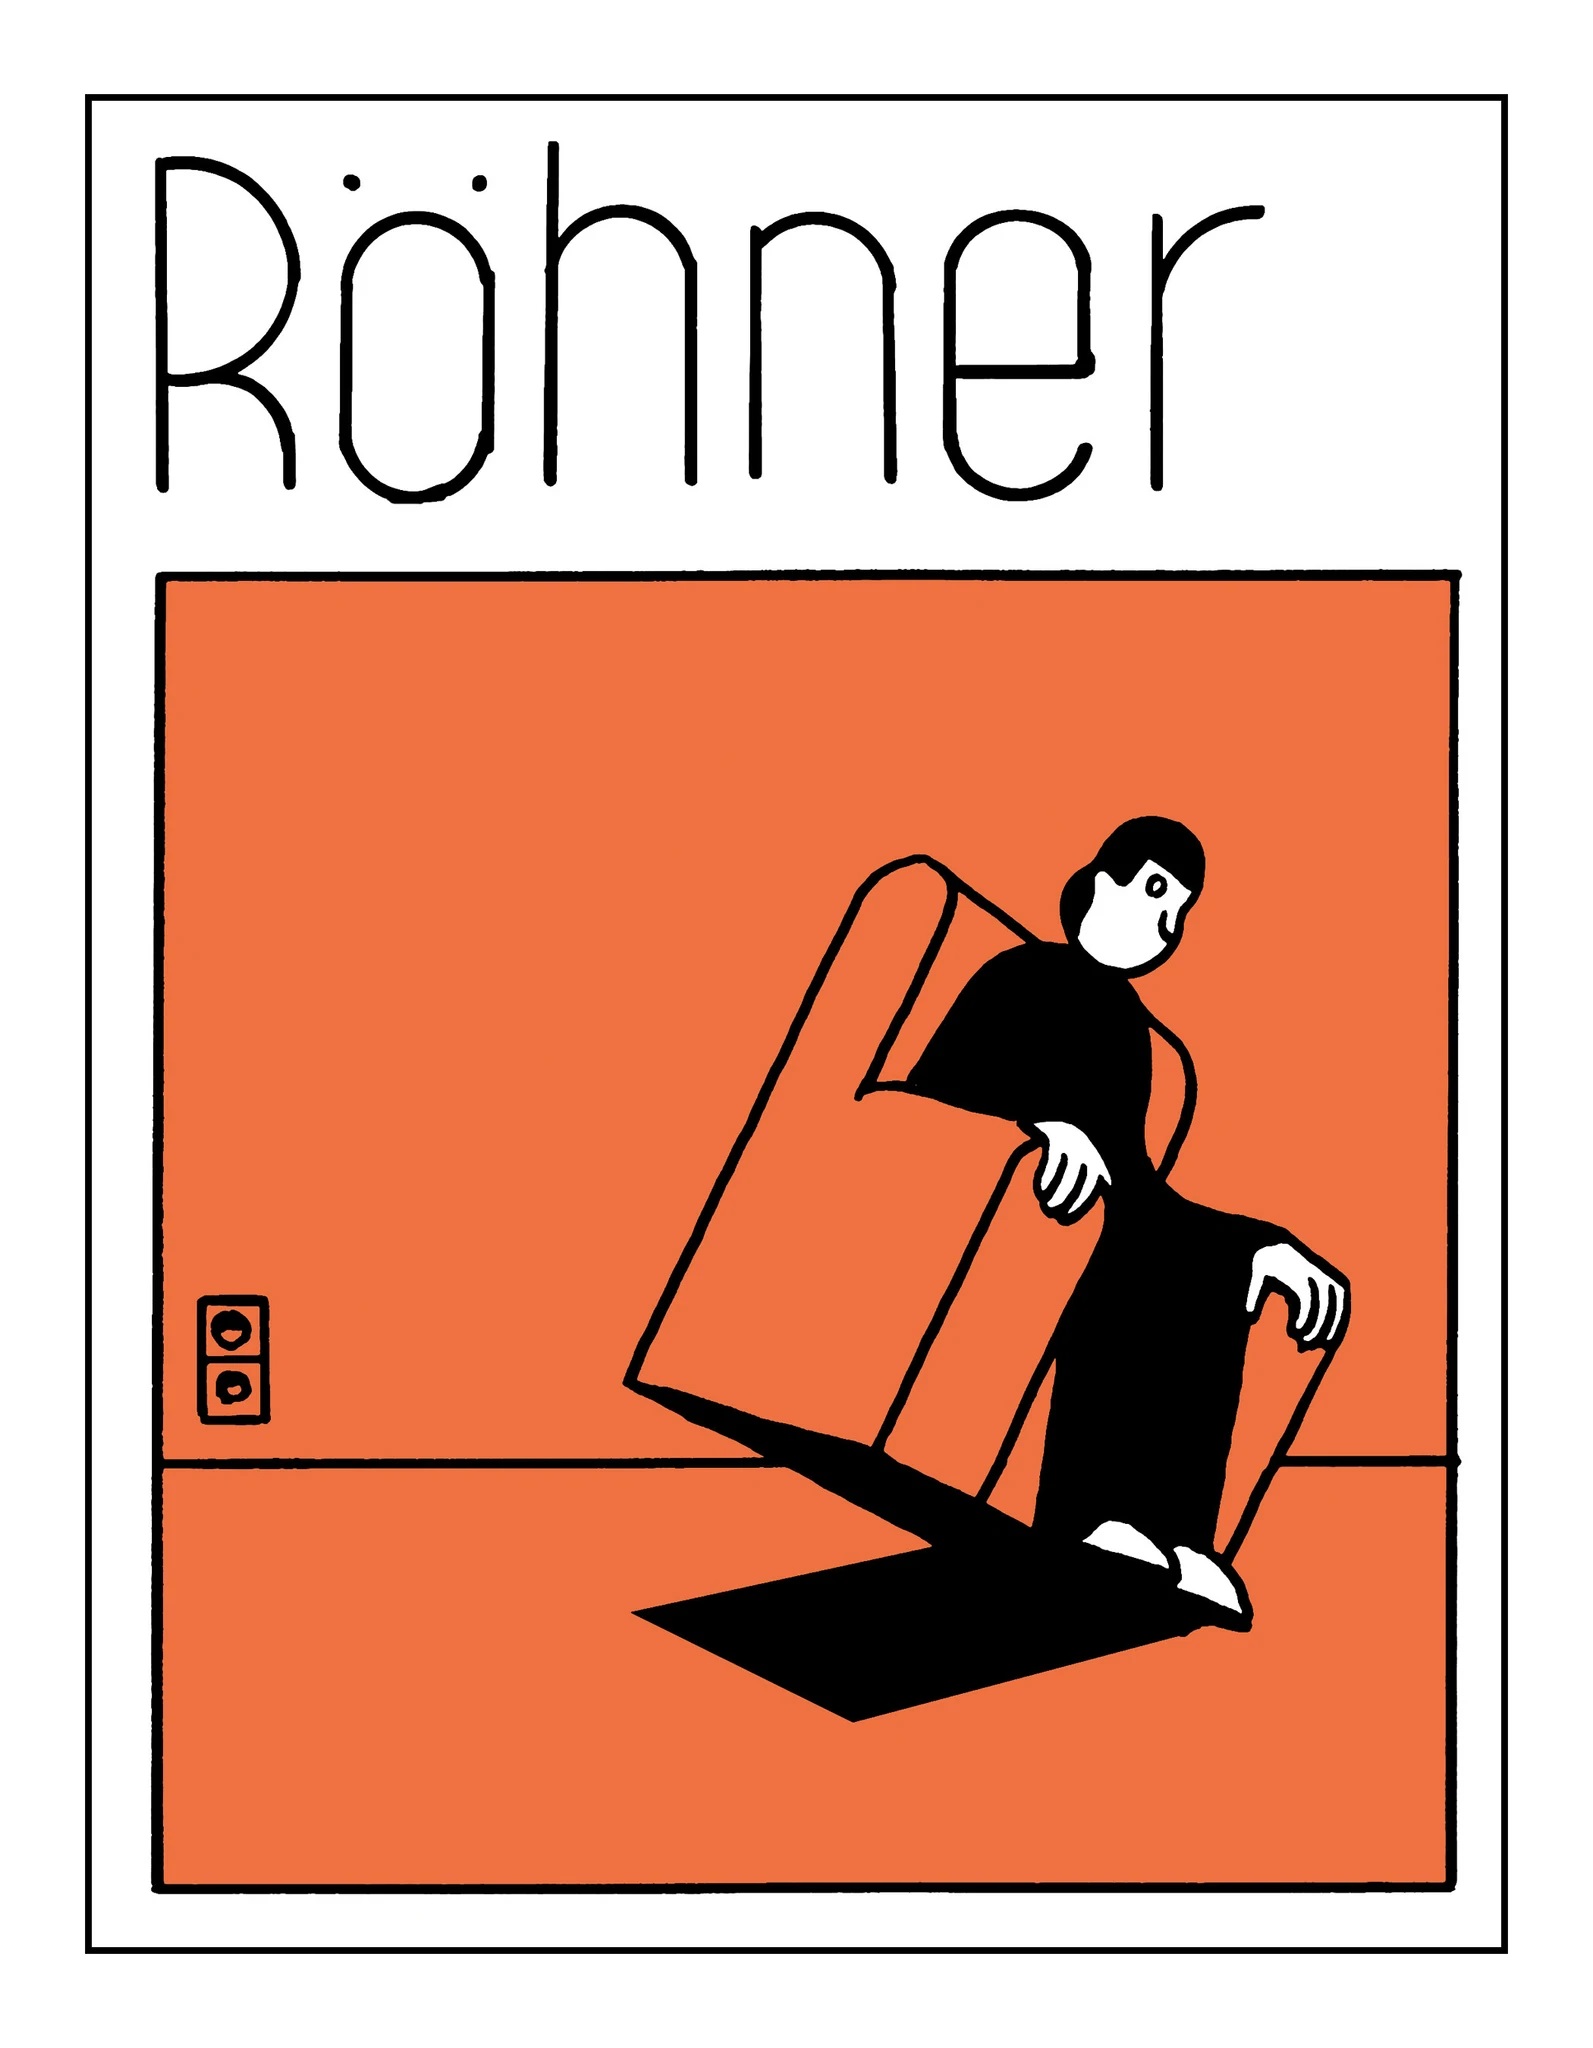 Röhner Graphic Novel By Max Baitinger